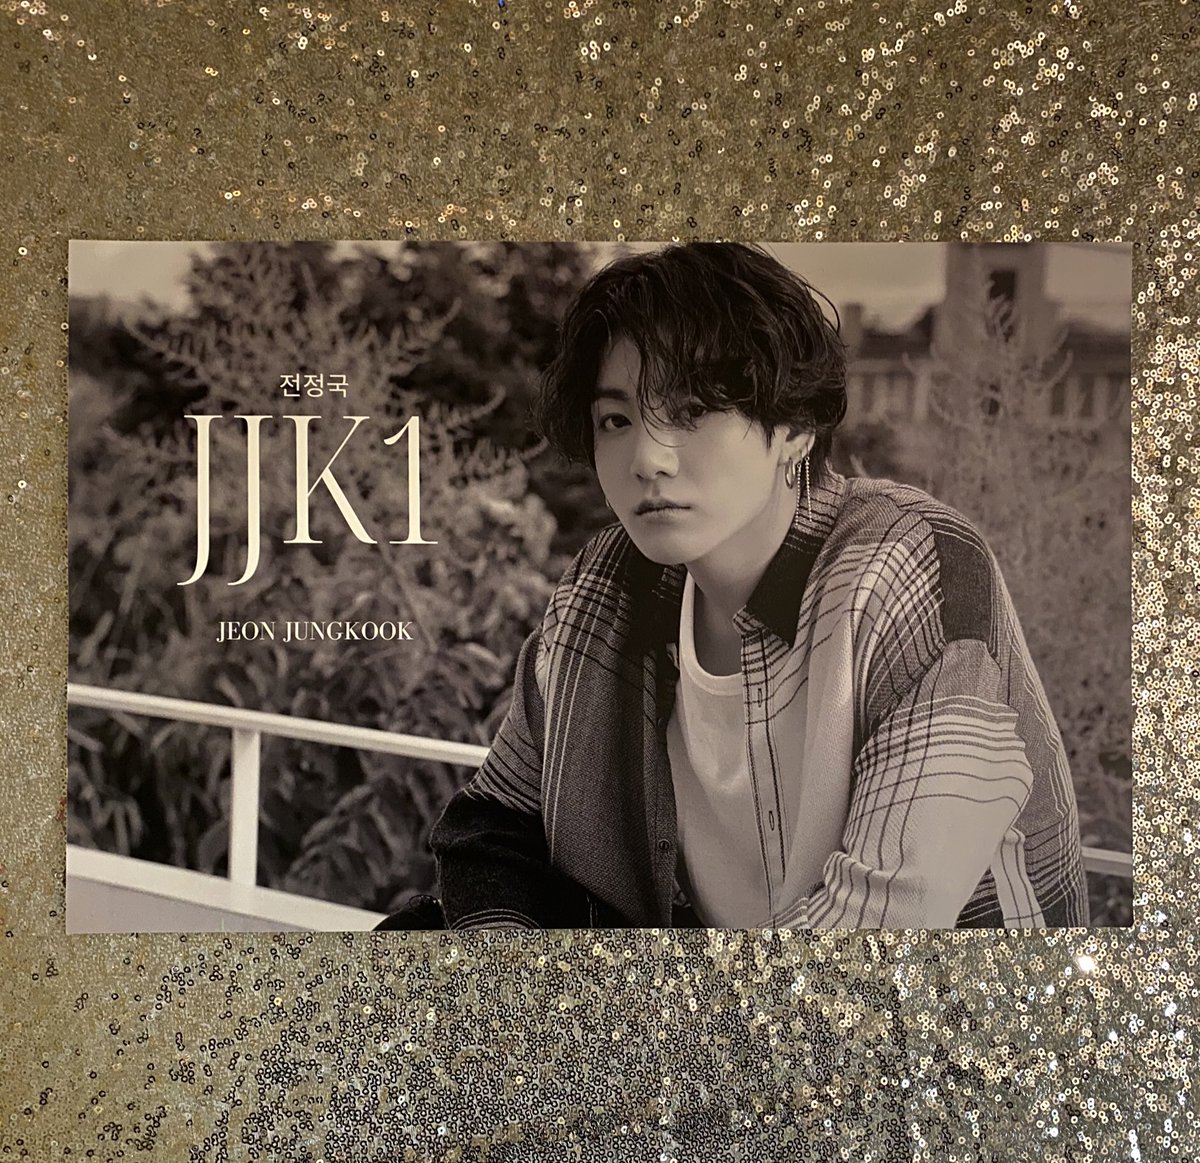 JK BIRTHDAY GA Win the  @Project_OT7 JJK1 dual CD set, the Euphoria photocard & double-sided Jungkook poster! W O R L D W I D E GA rules in thread! Gifts from  http://projectot7.com [ #StillWithJungkook  #HAPPYJKDAY  #BTSGA  #BTSgiveaway #JungkookDay]